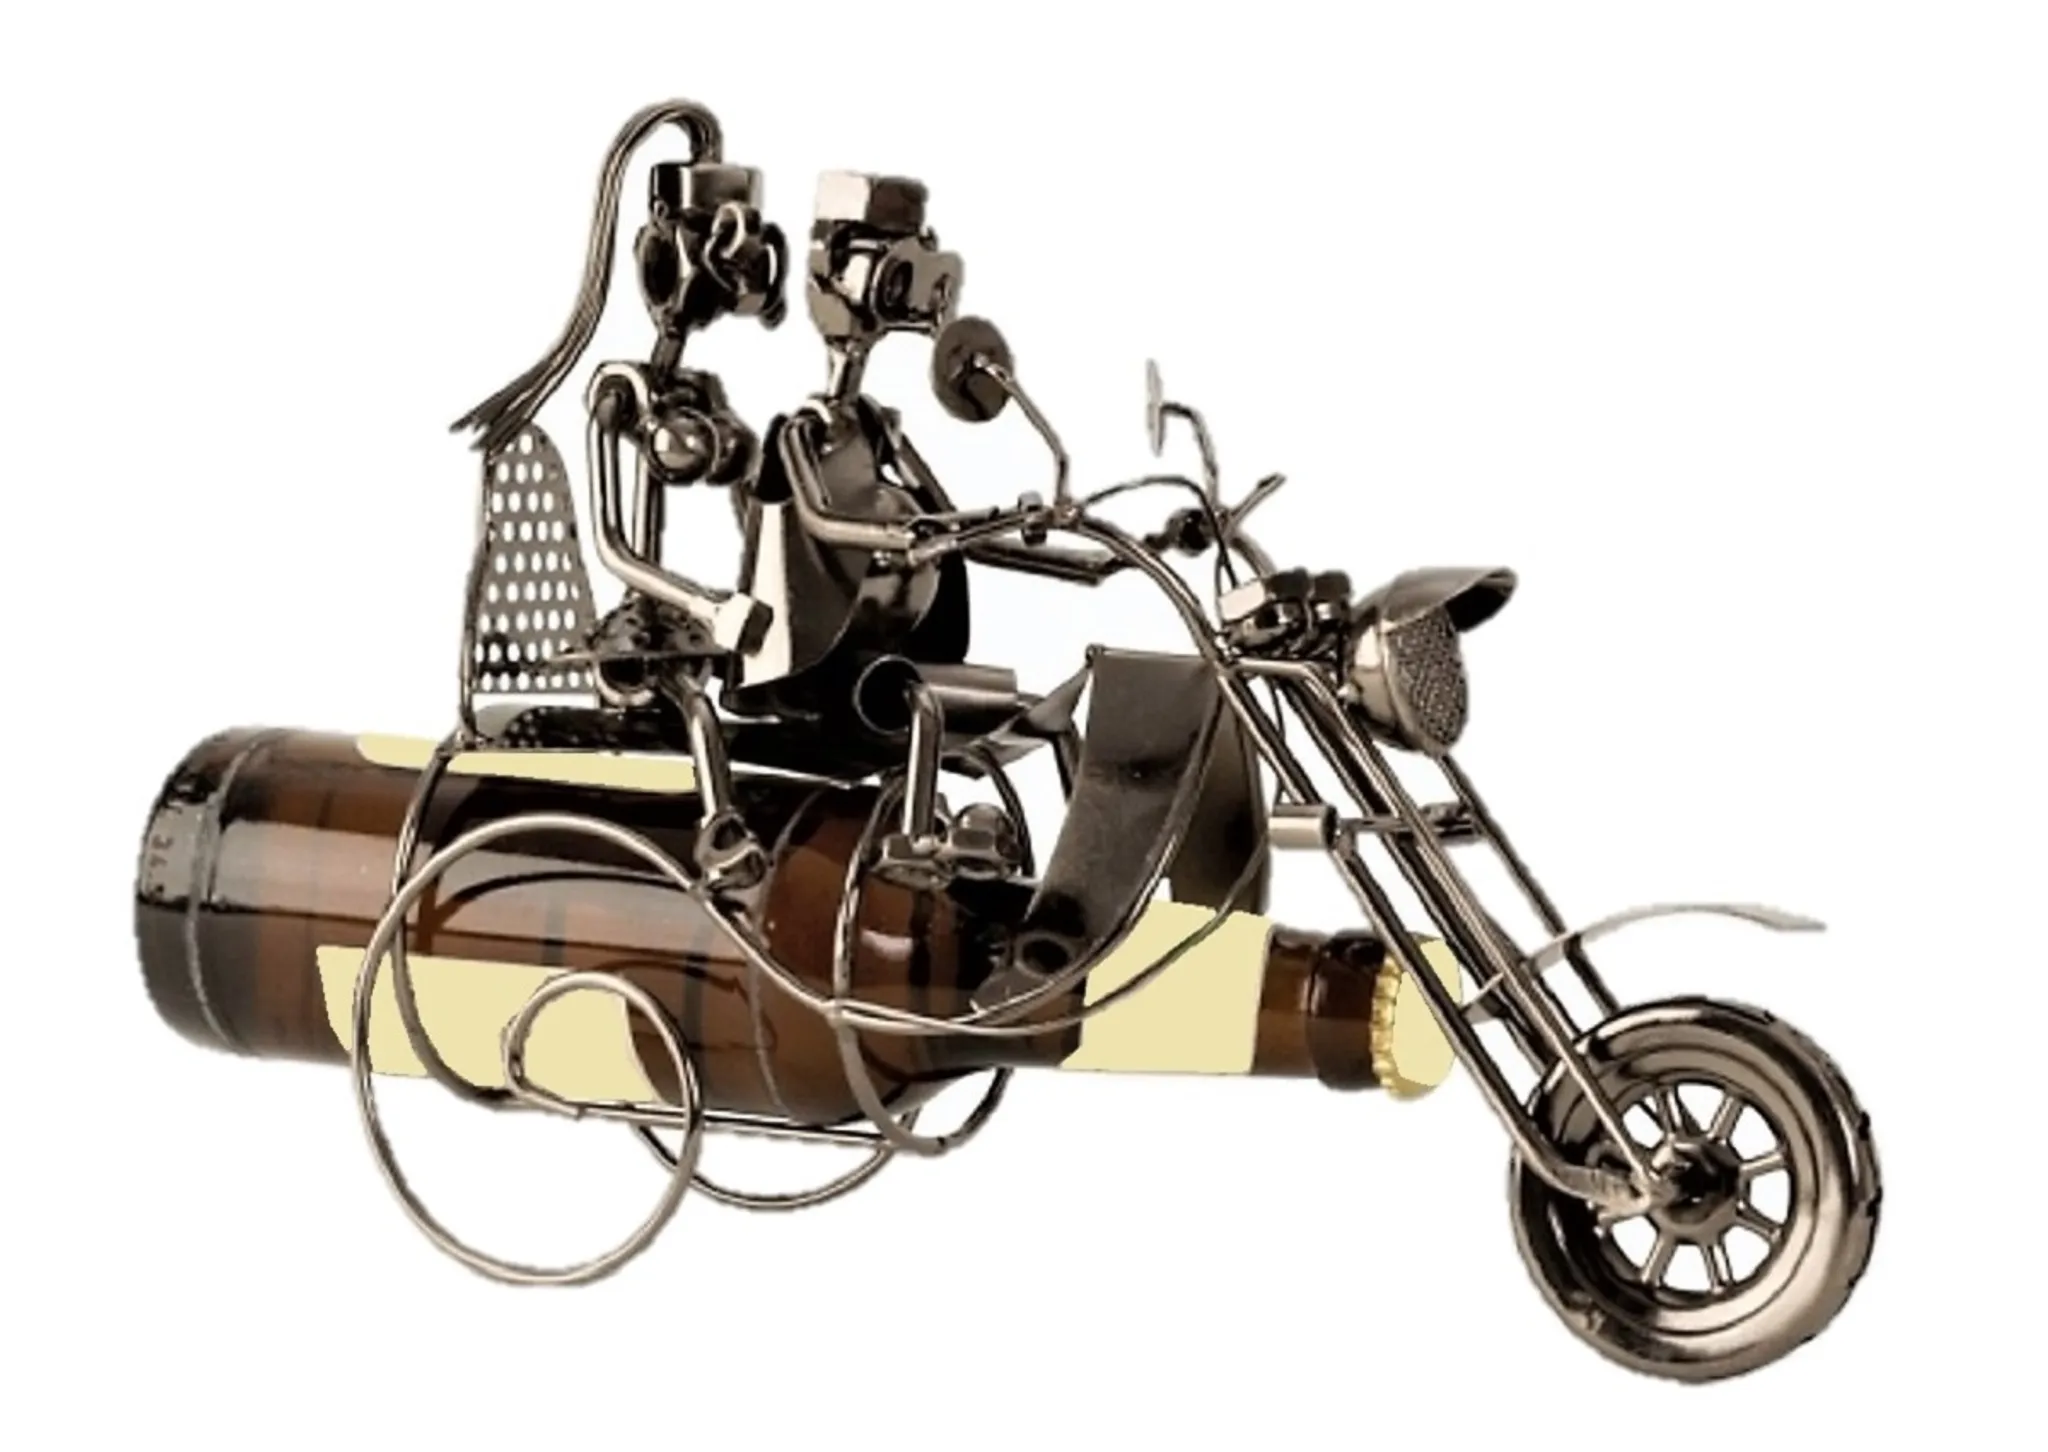 BRUBAKER Flaschenhalter Vintage Motorrad mit